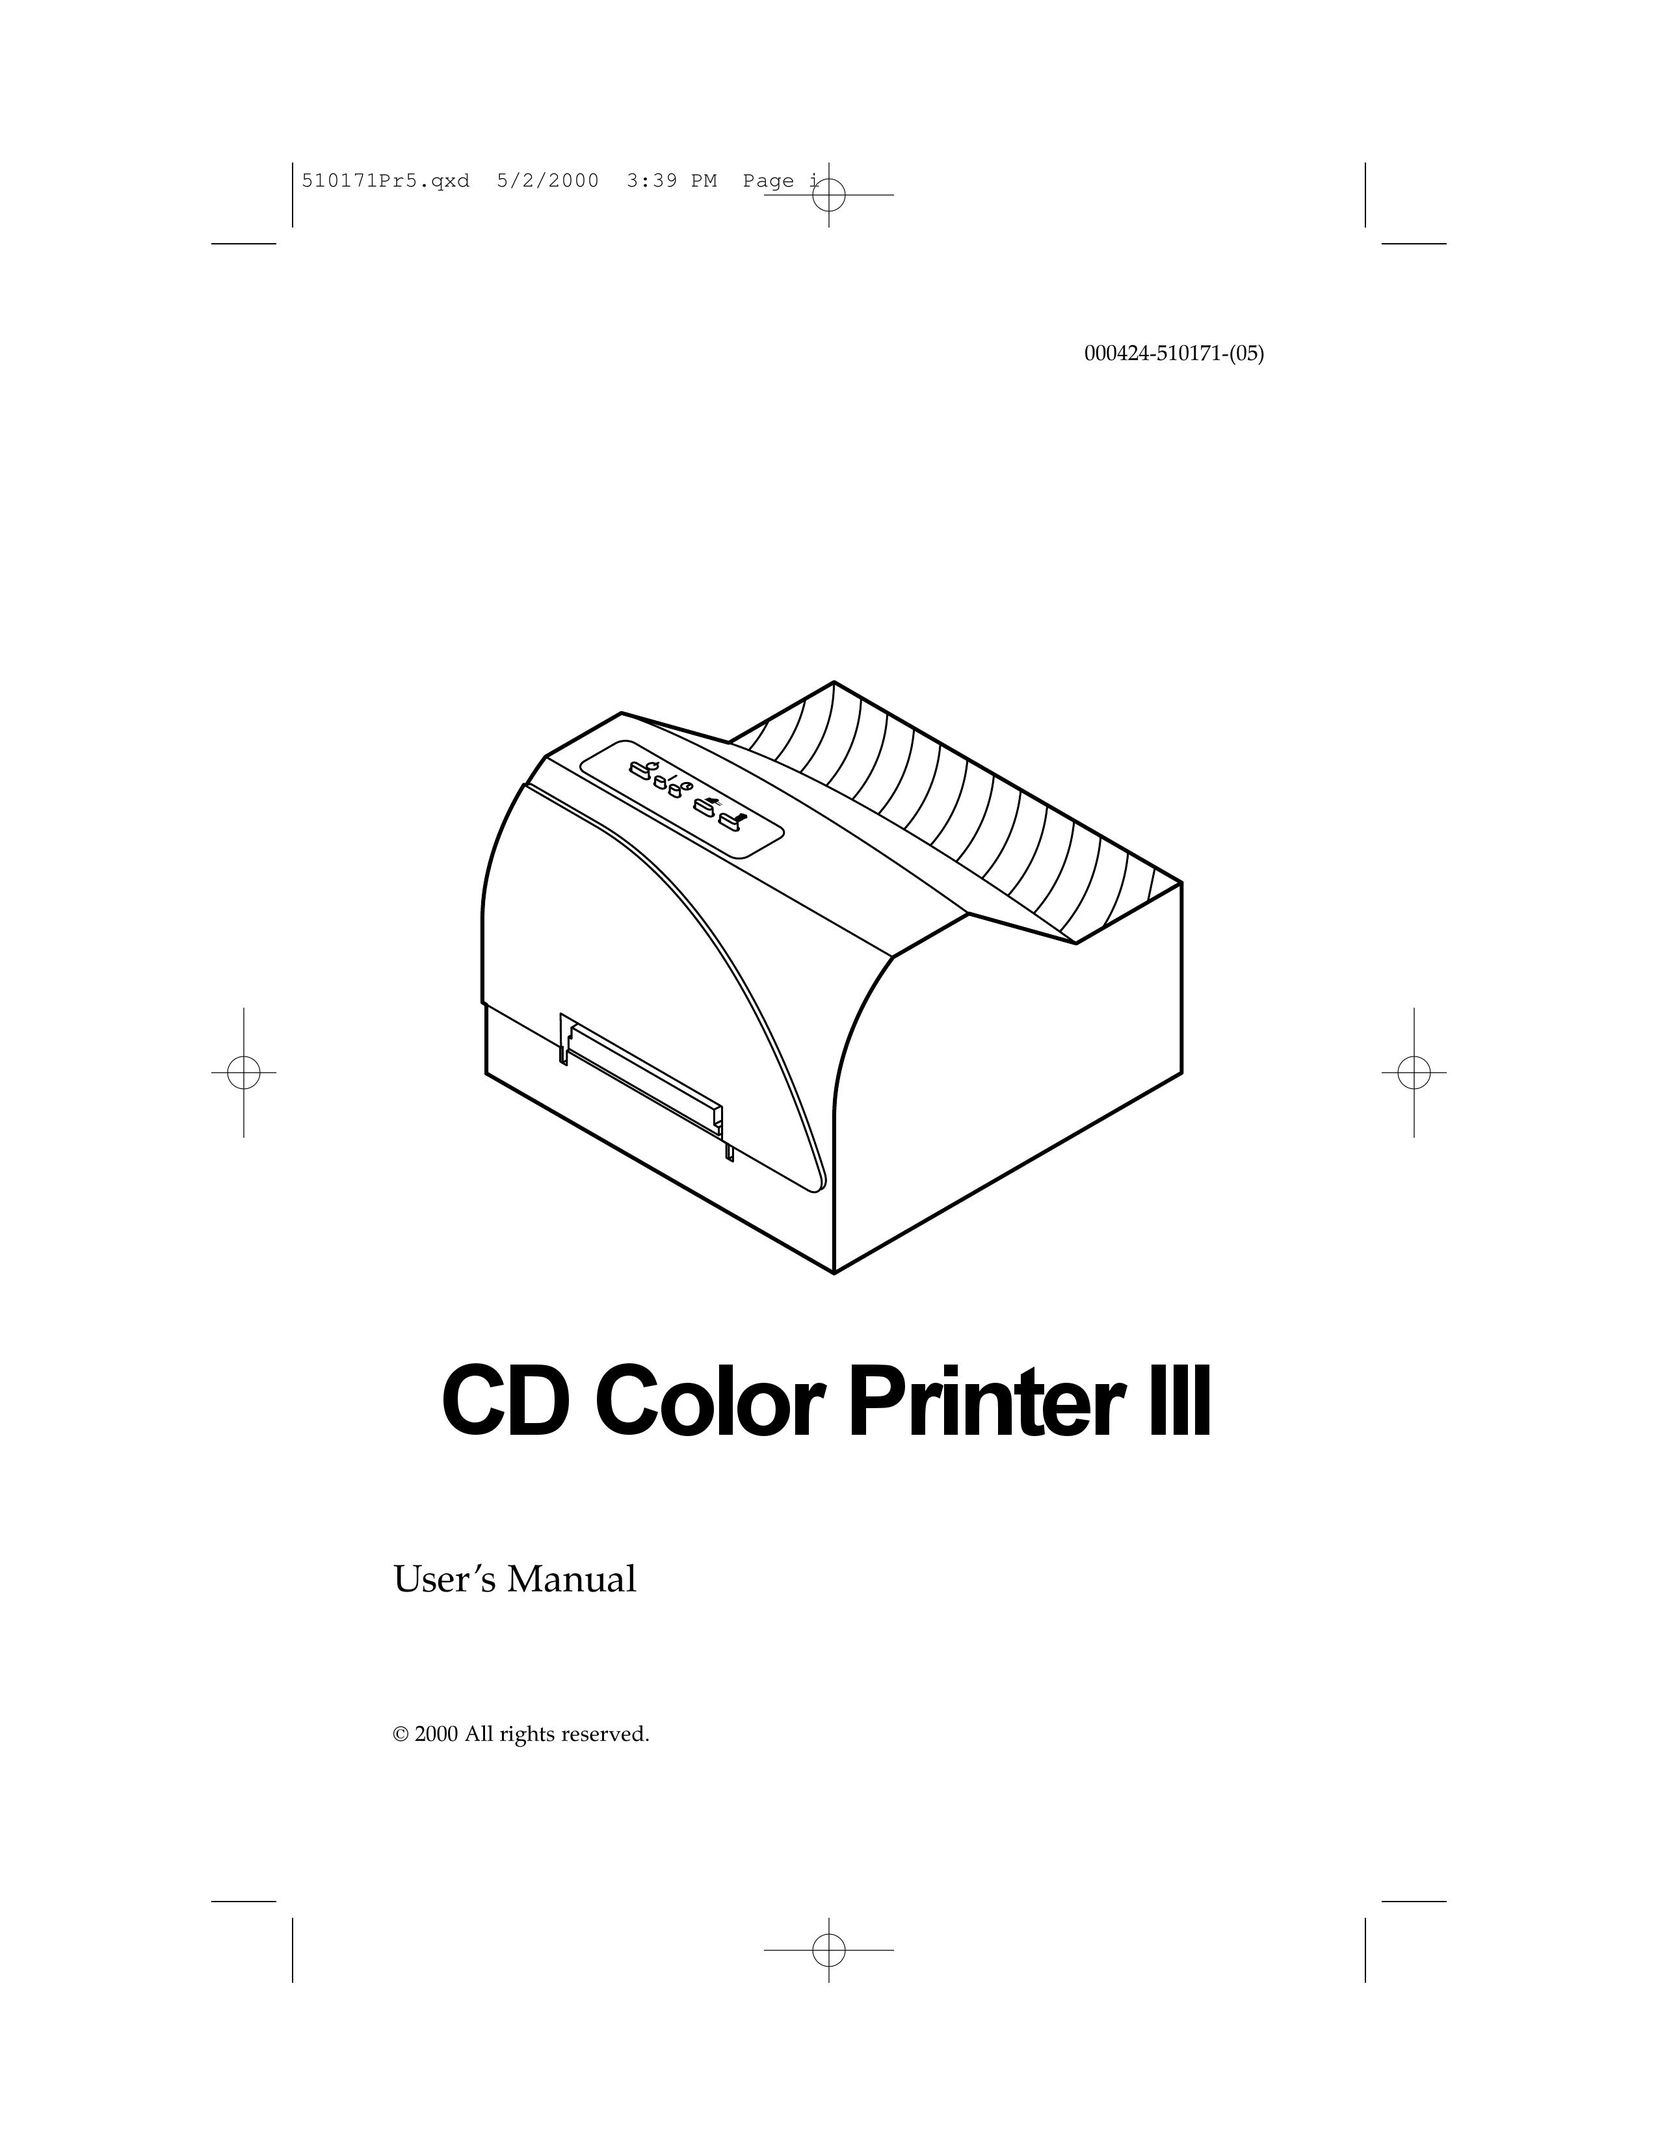 Primera Technology 000424-510171-(05) Printer User Manual